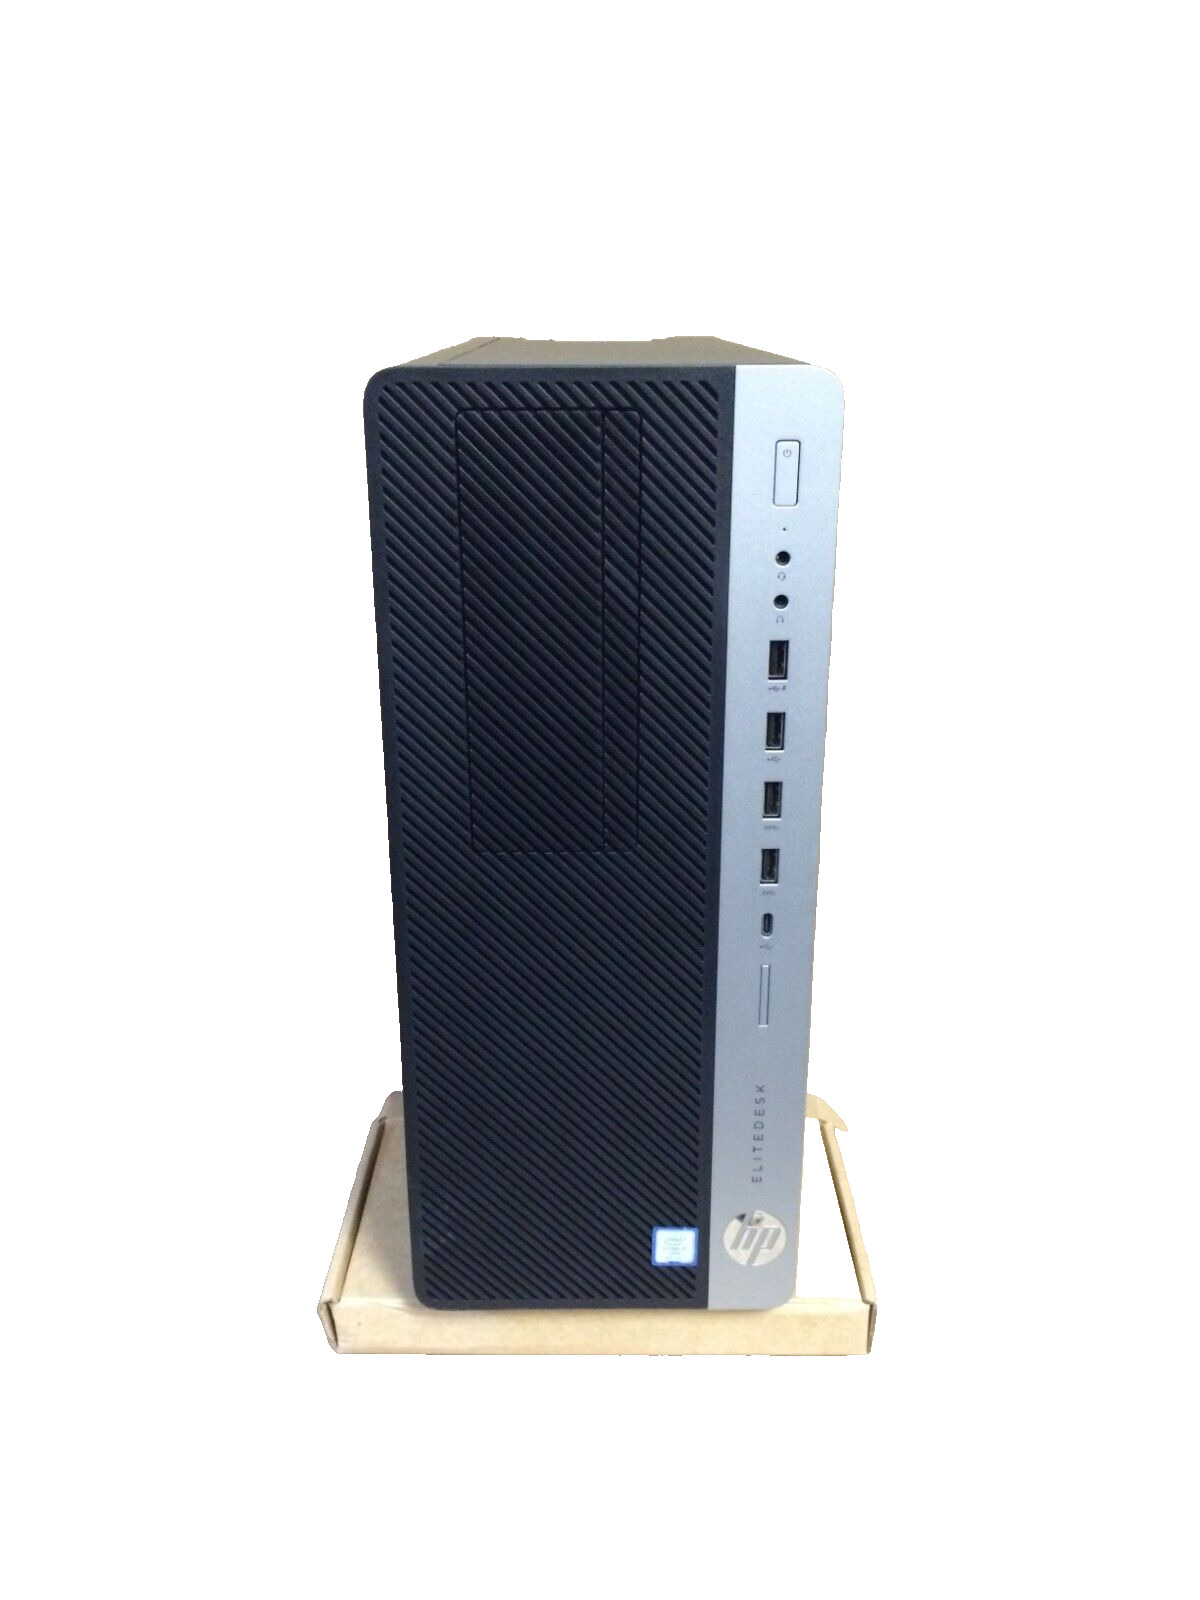 HP EliteDesk 800 G4 Tower/6C i7-8700@3.2GHz/32GB RAM,1TB SSD/WX5100 8GB Graphics